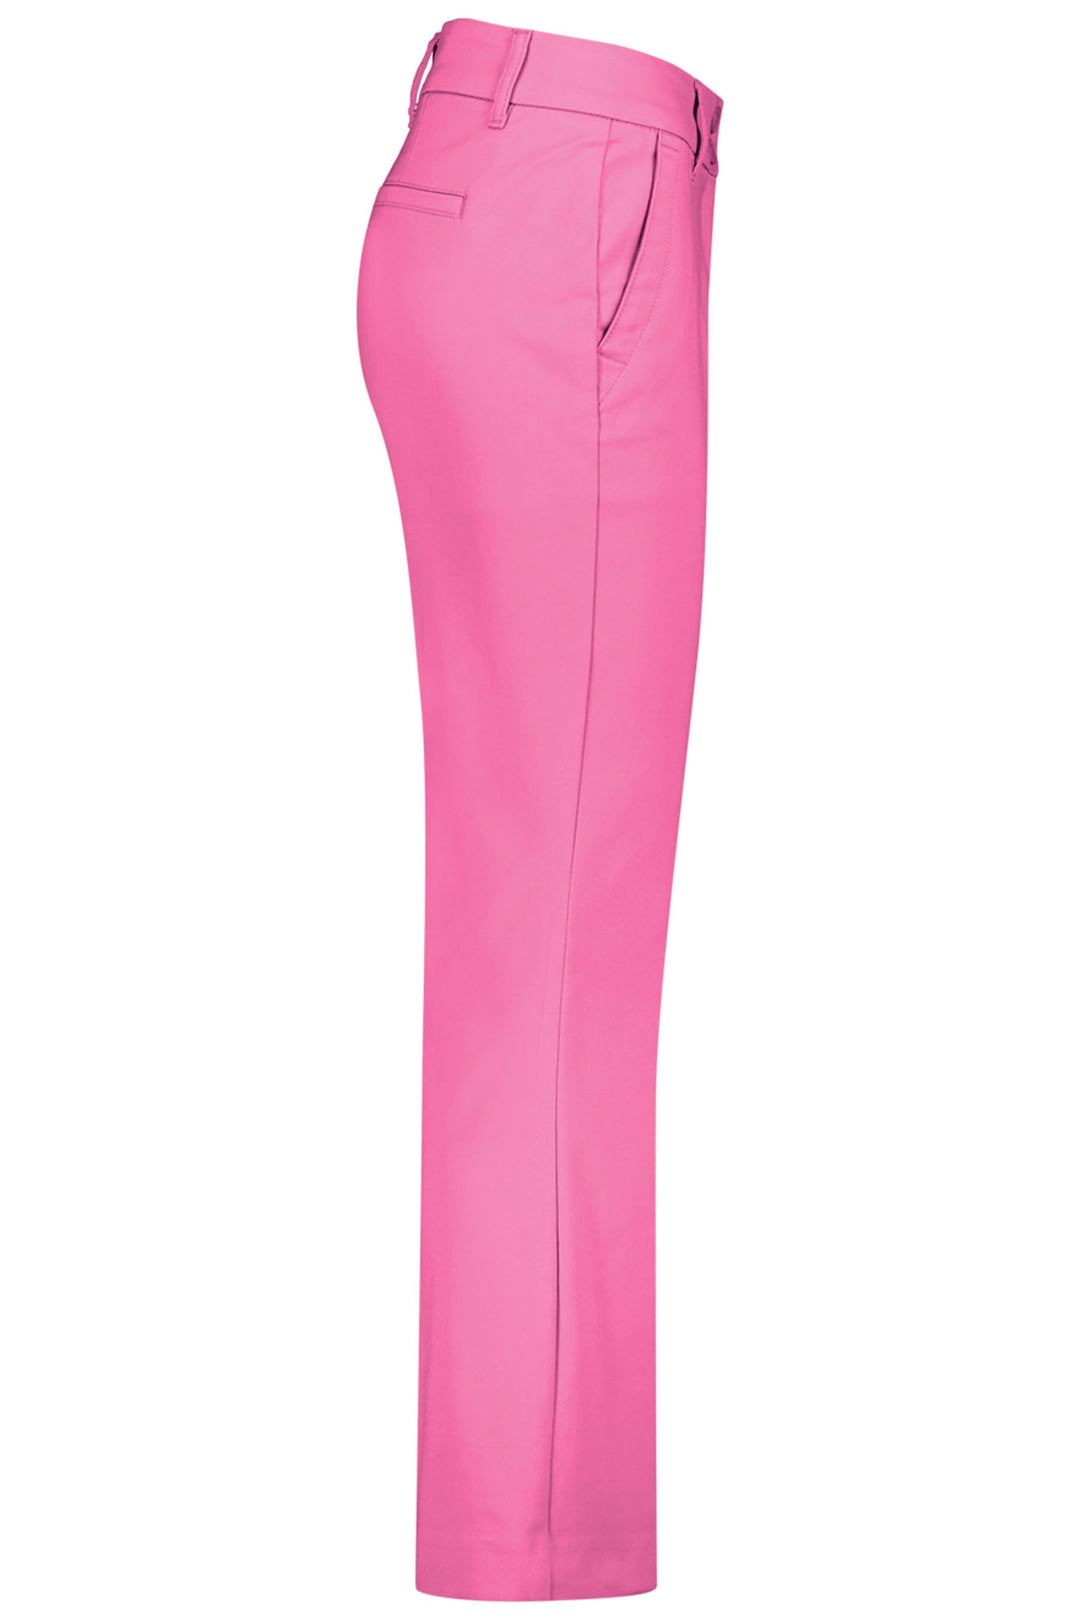 Red Button SRB4206 Bibette Cyclaam Pink Smart Trousers 72cm - Olivia Grace Fashion